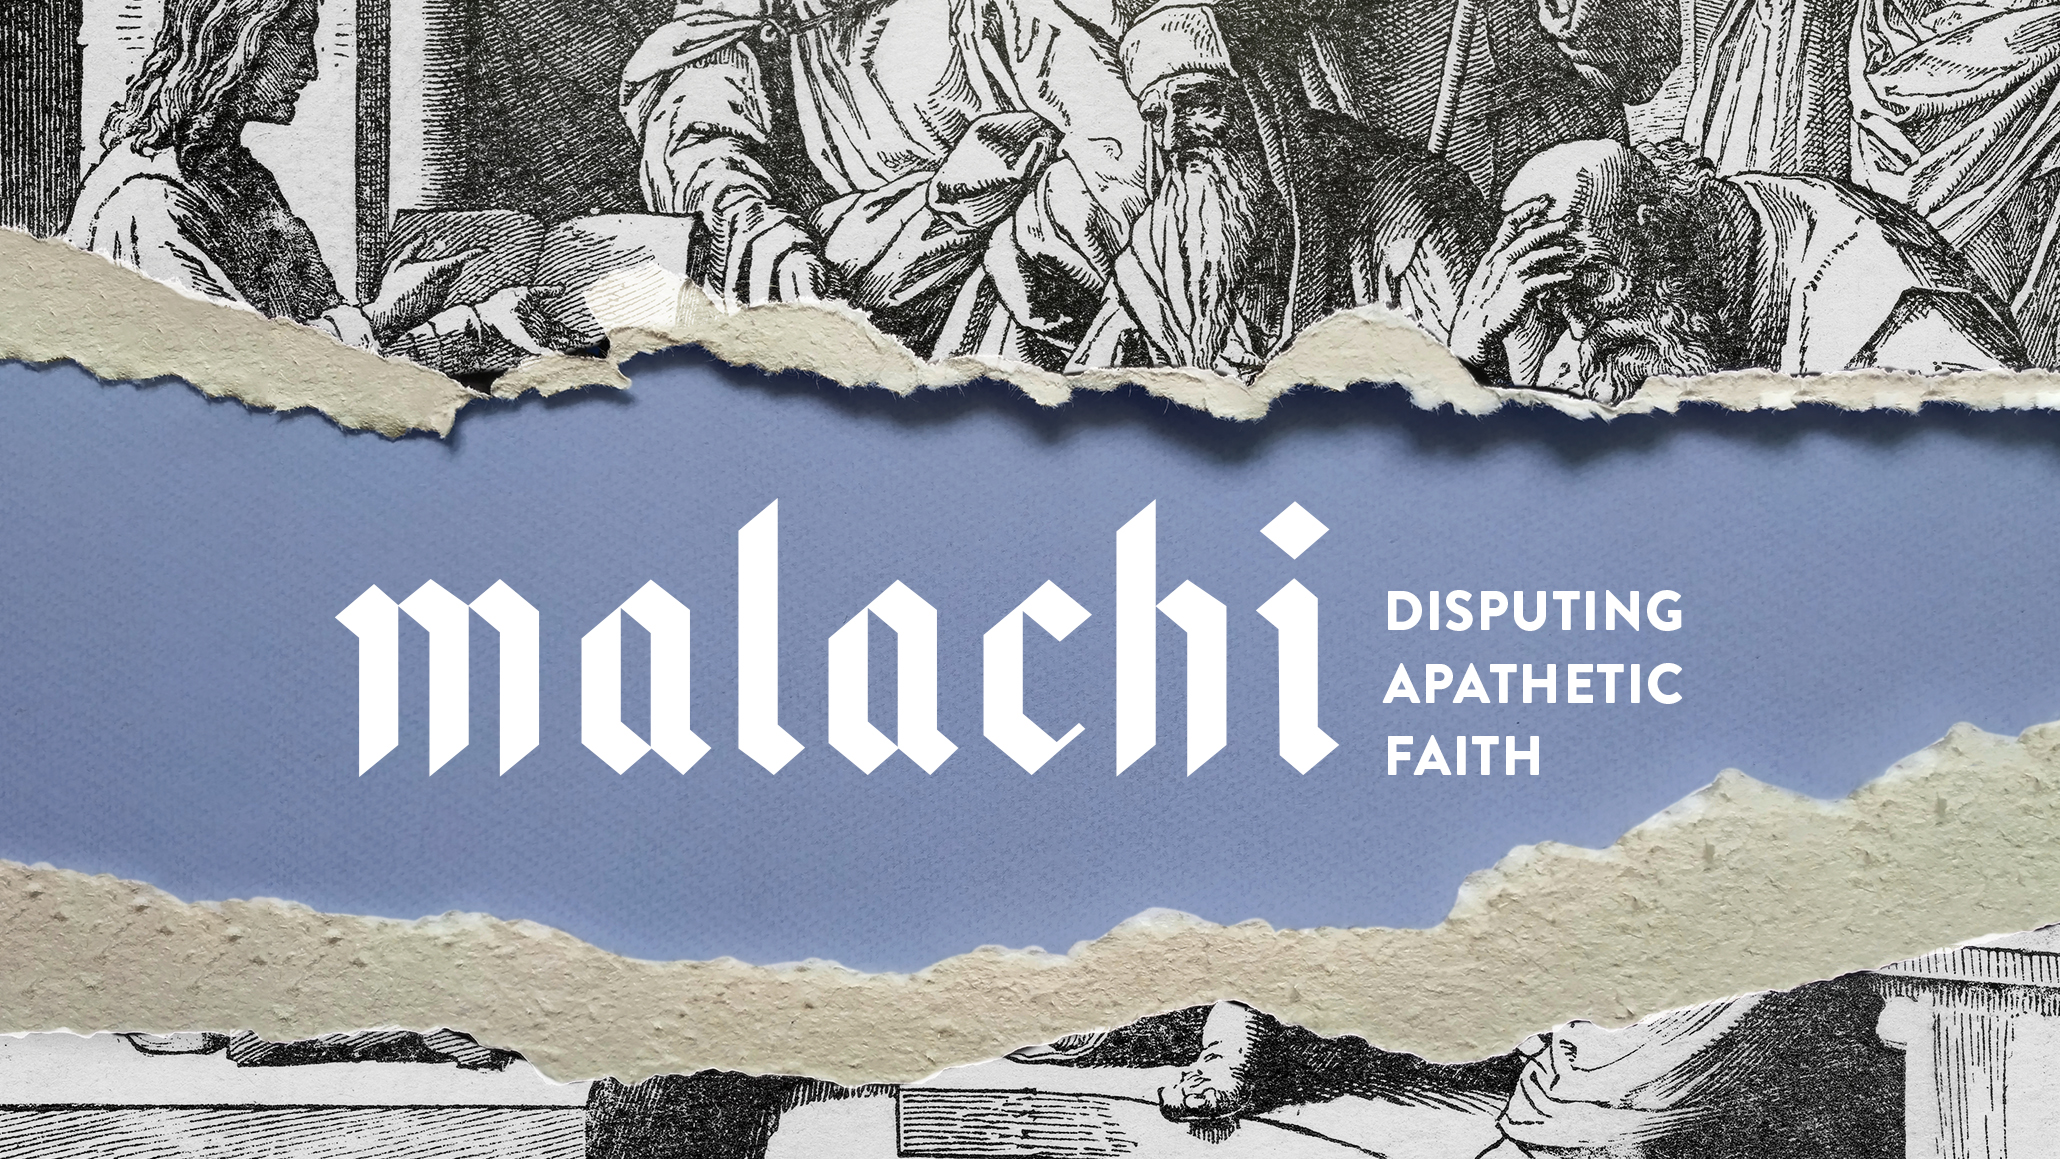 Malachi 2:10-16